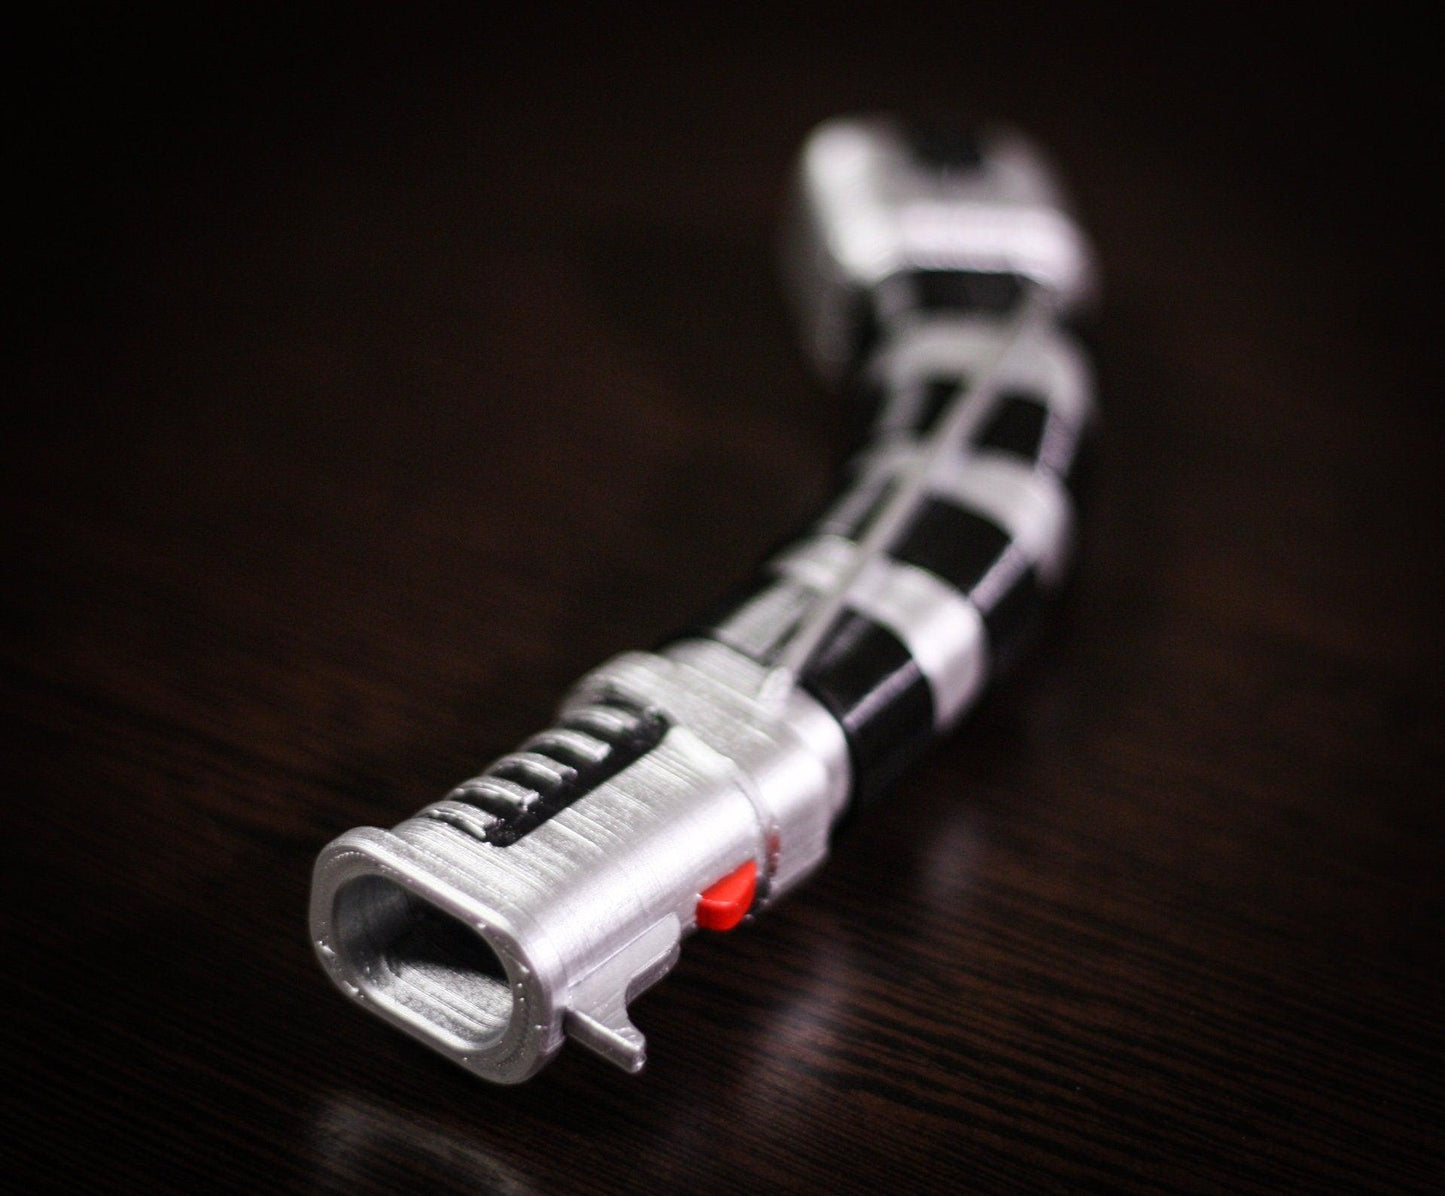 Asajj Ventress' lightsaber | Star Wars Prop weapon replica - 3DPrintProps